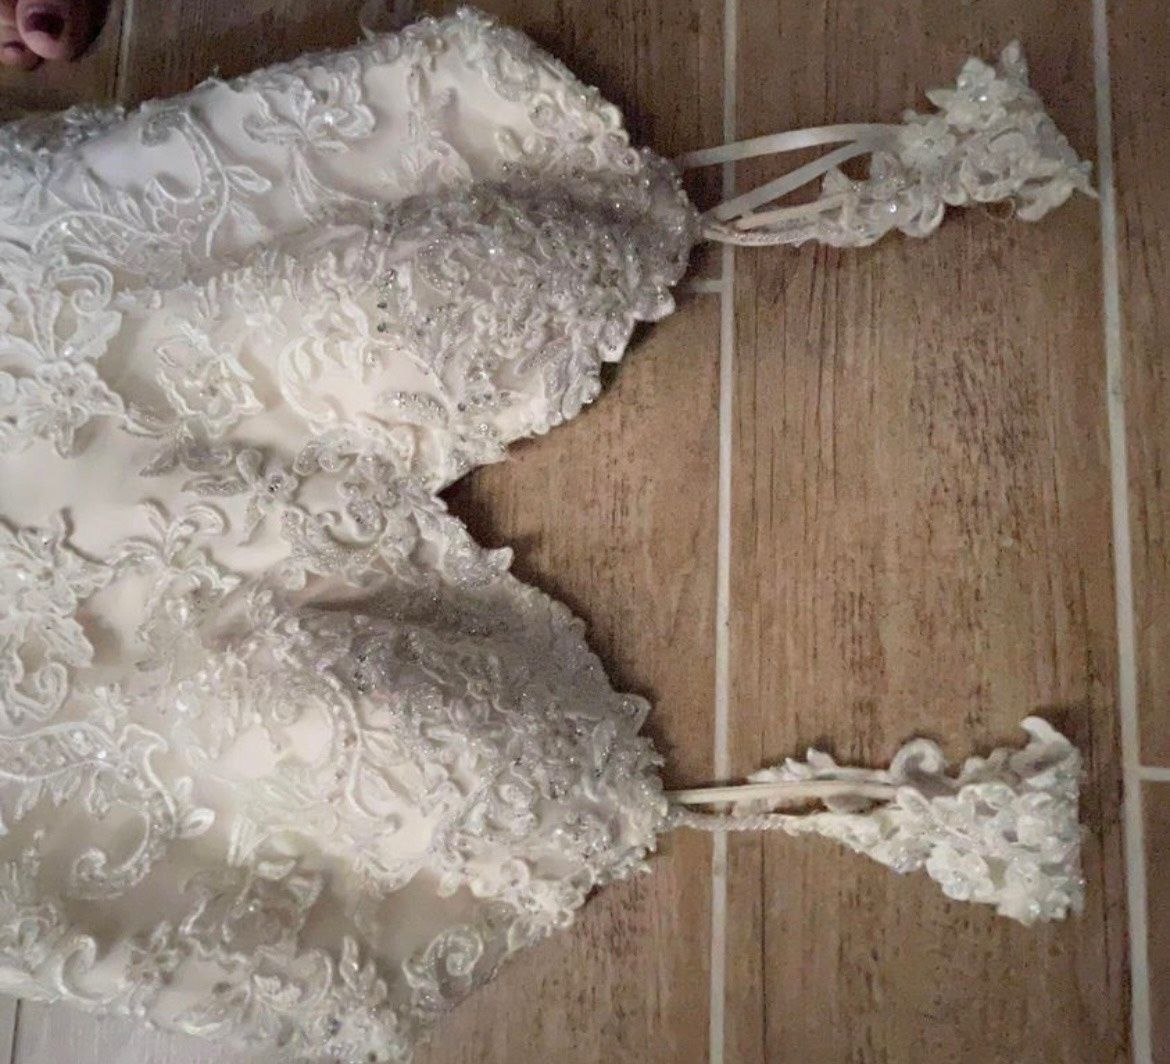 Size 12 Wedding Plunge White Mermaid Dress on Queenly